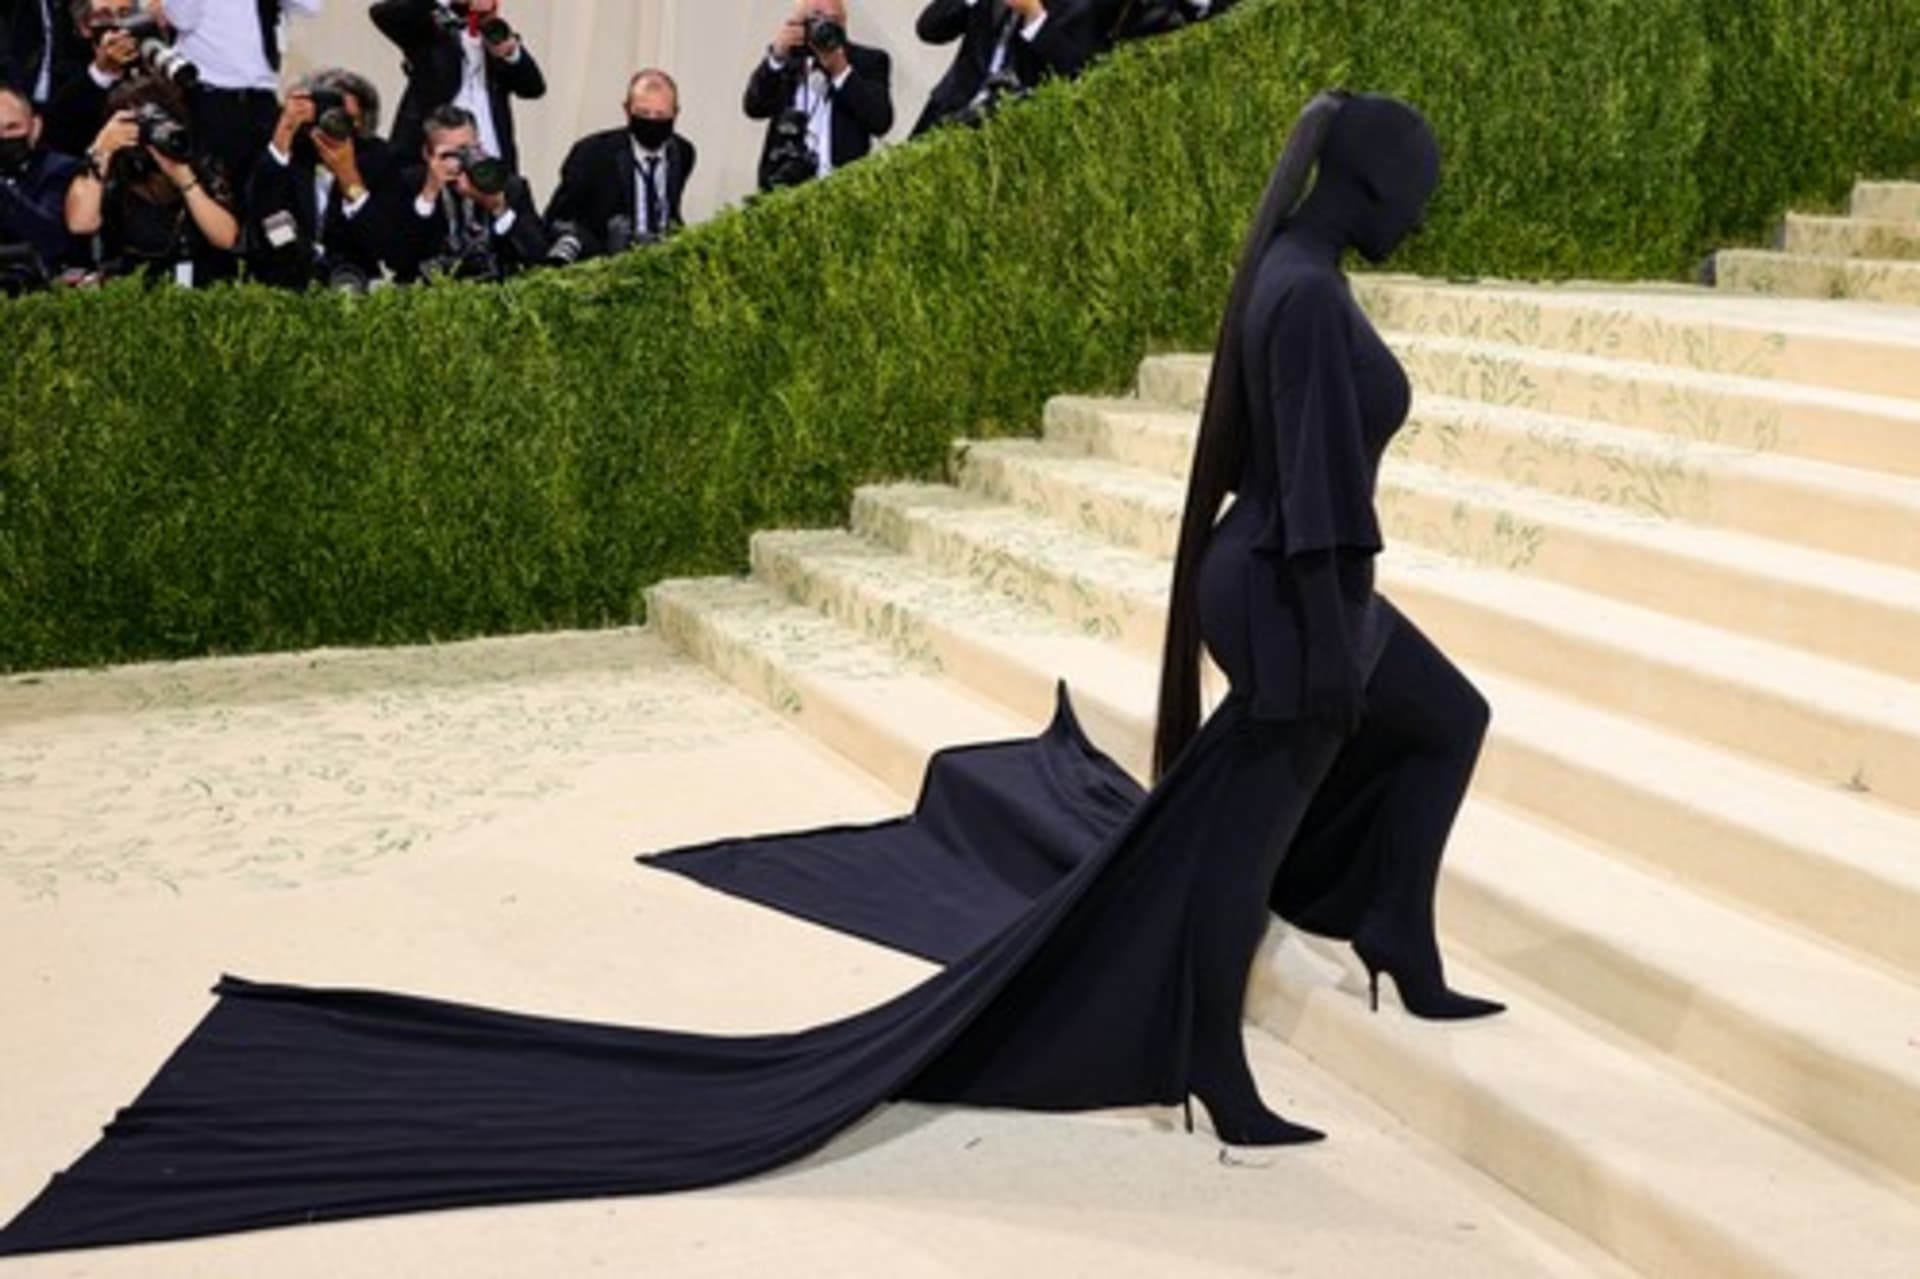 Kim Kardashian na Met Gala 2021